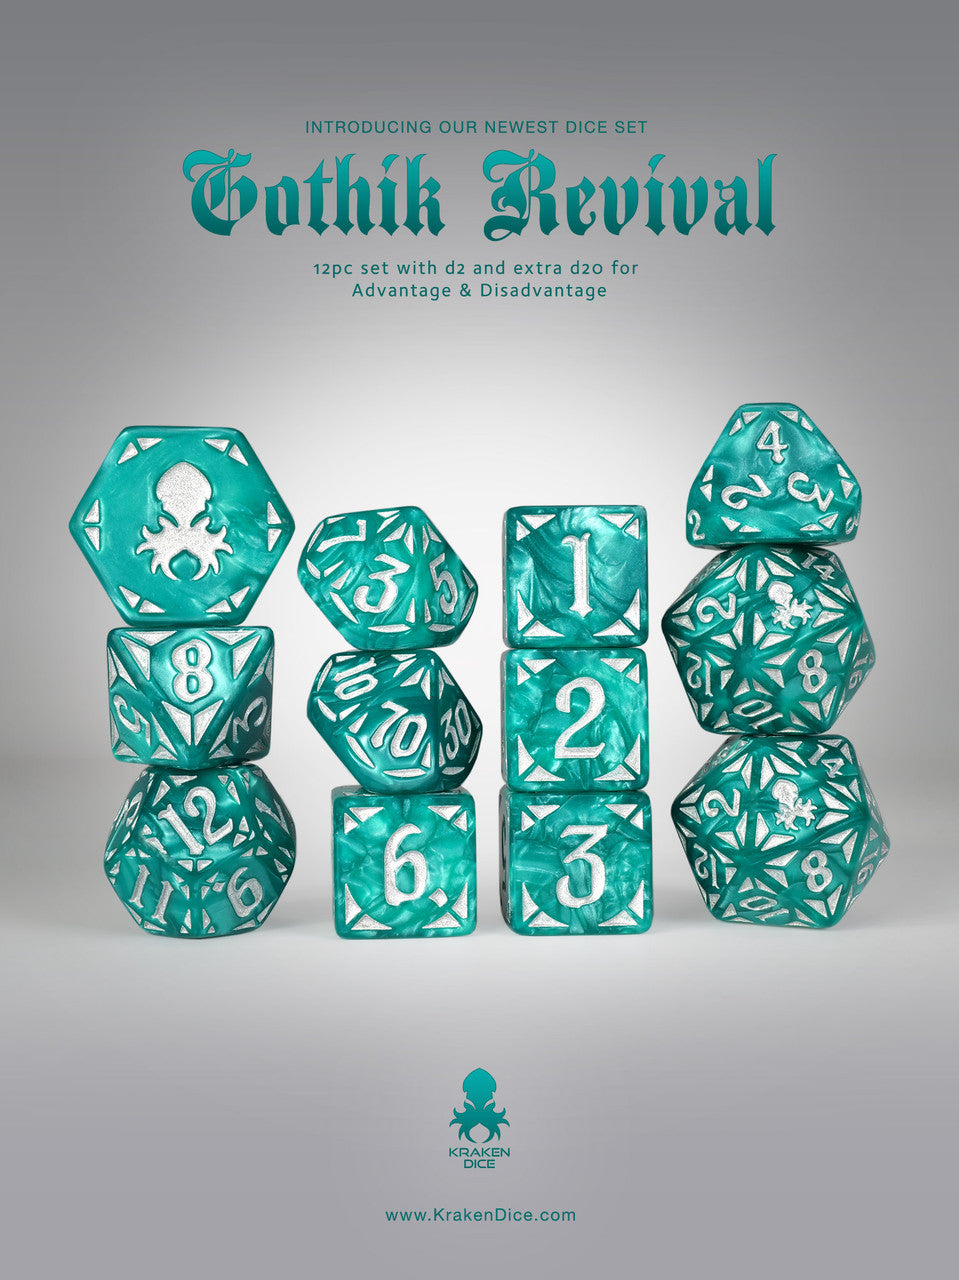 Teal Gothik Revival  RPG 12pc Dice Set